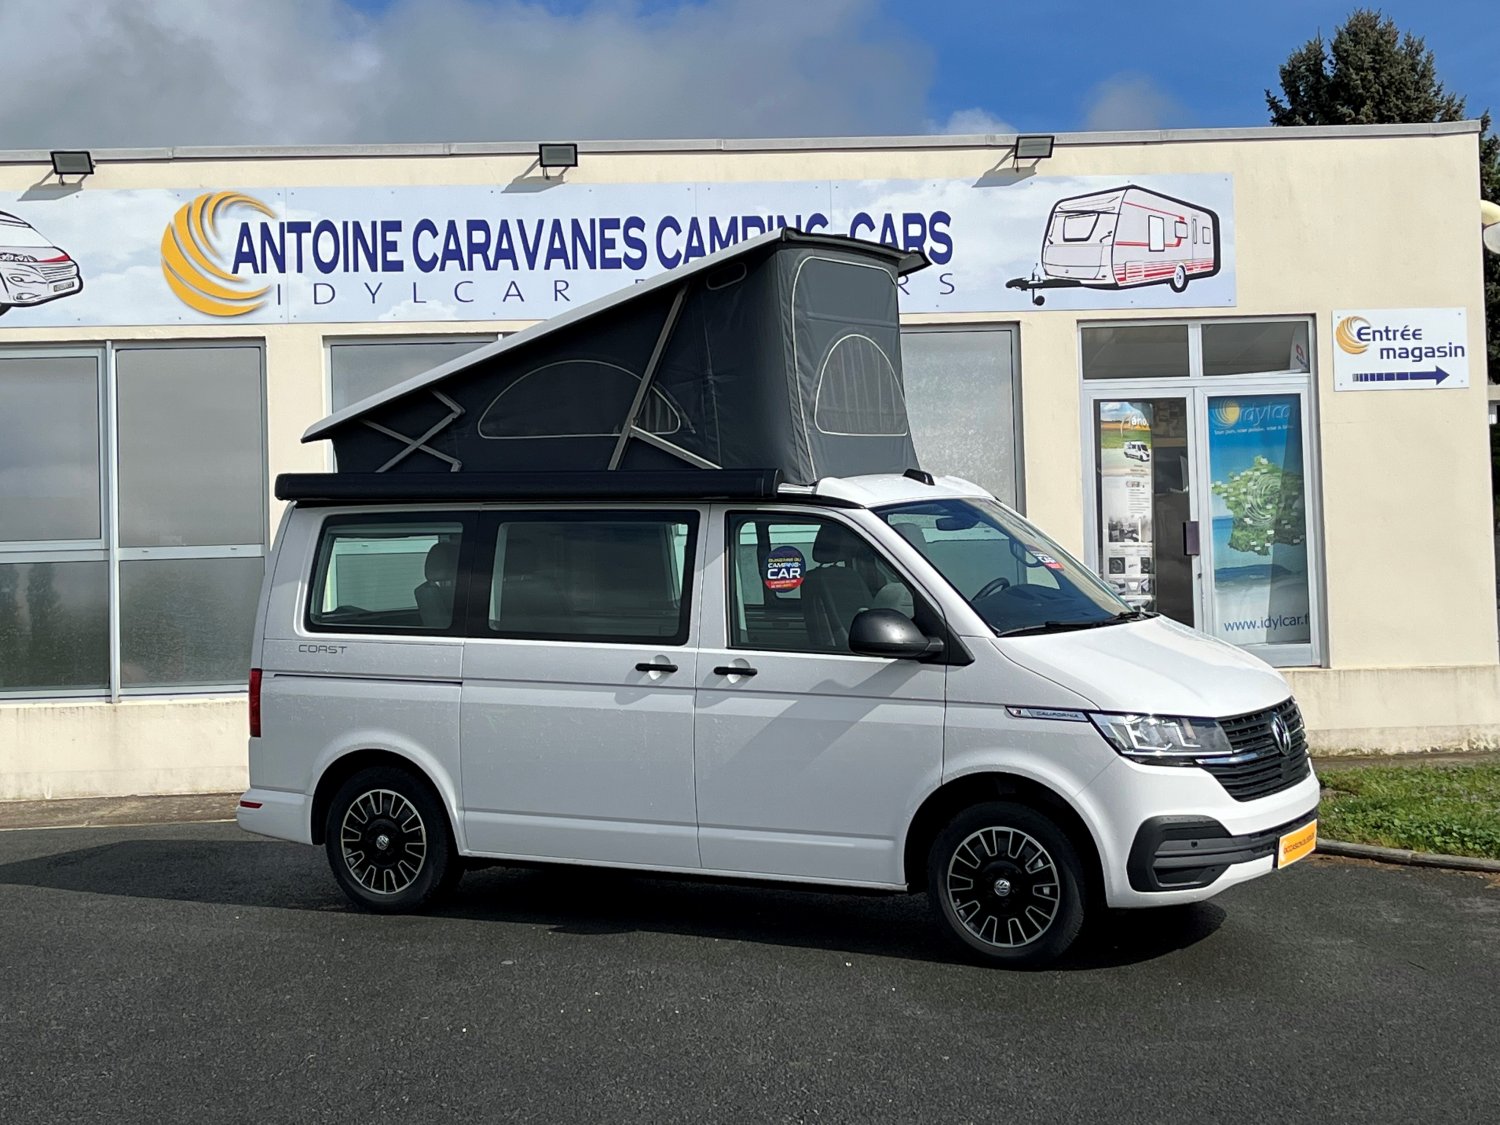 Antoine Caravanes et Camping Car - Volkswagen CALIFORNIA COAST 6.1 à 84 900 €€